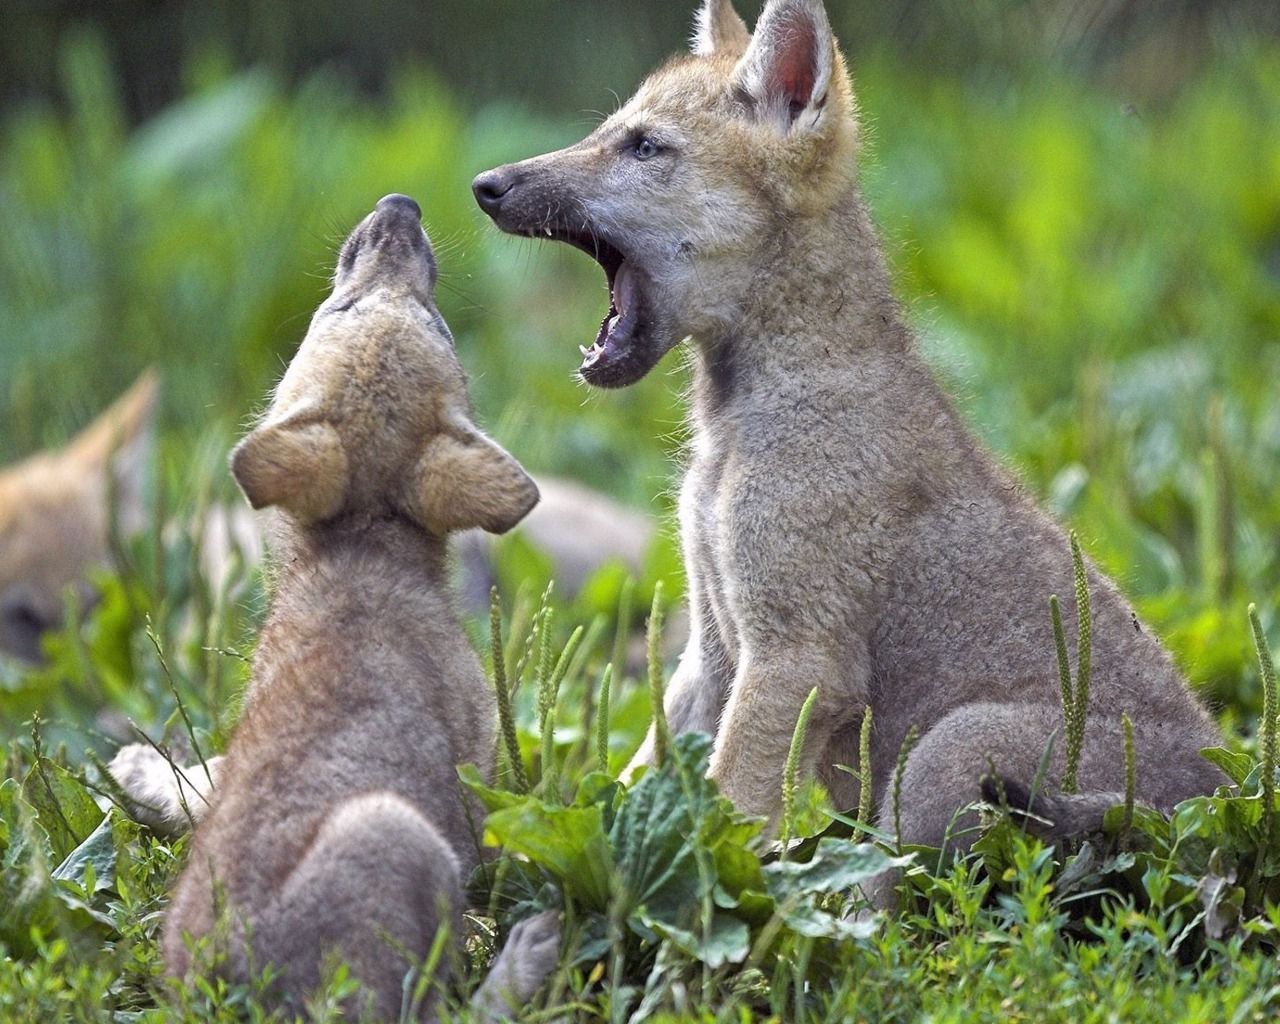 Download HD wildlife wallpaper, wildlife photography picture, wildlife photography image, best wildlife picture, free wild. Baby wolves, Big animals, Wolf pup